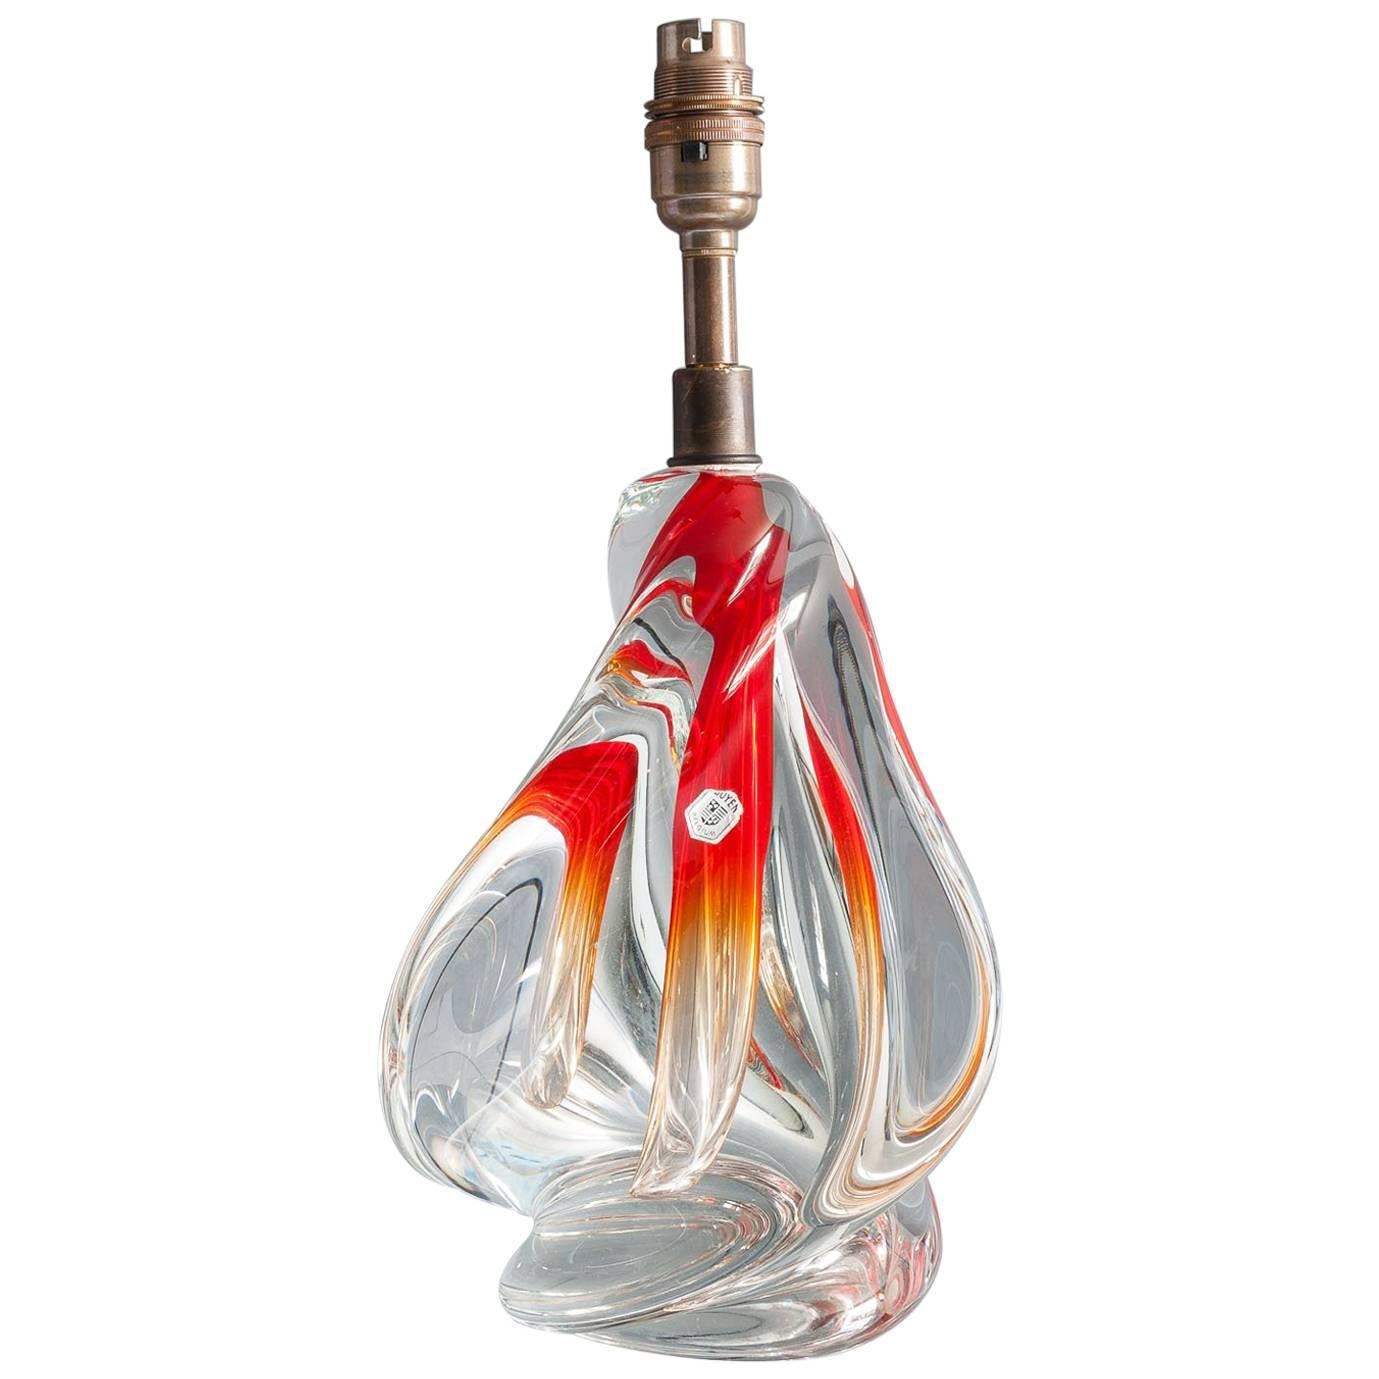 1960s Belgium Doyen Crystal Handblown Lamp Base